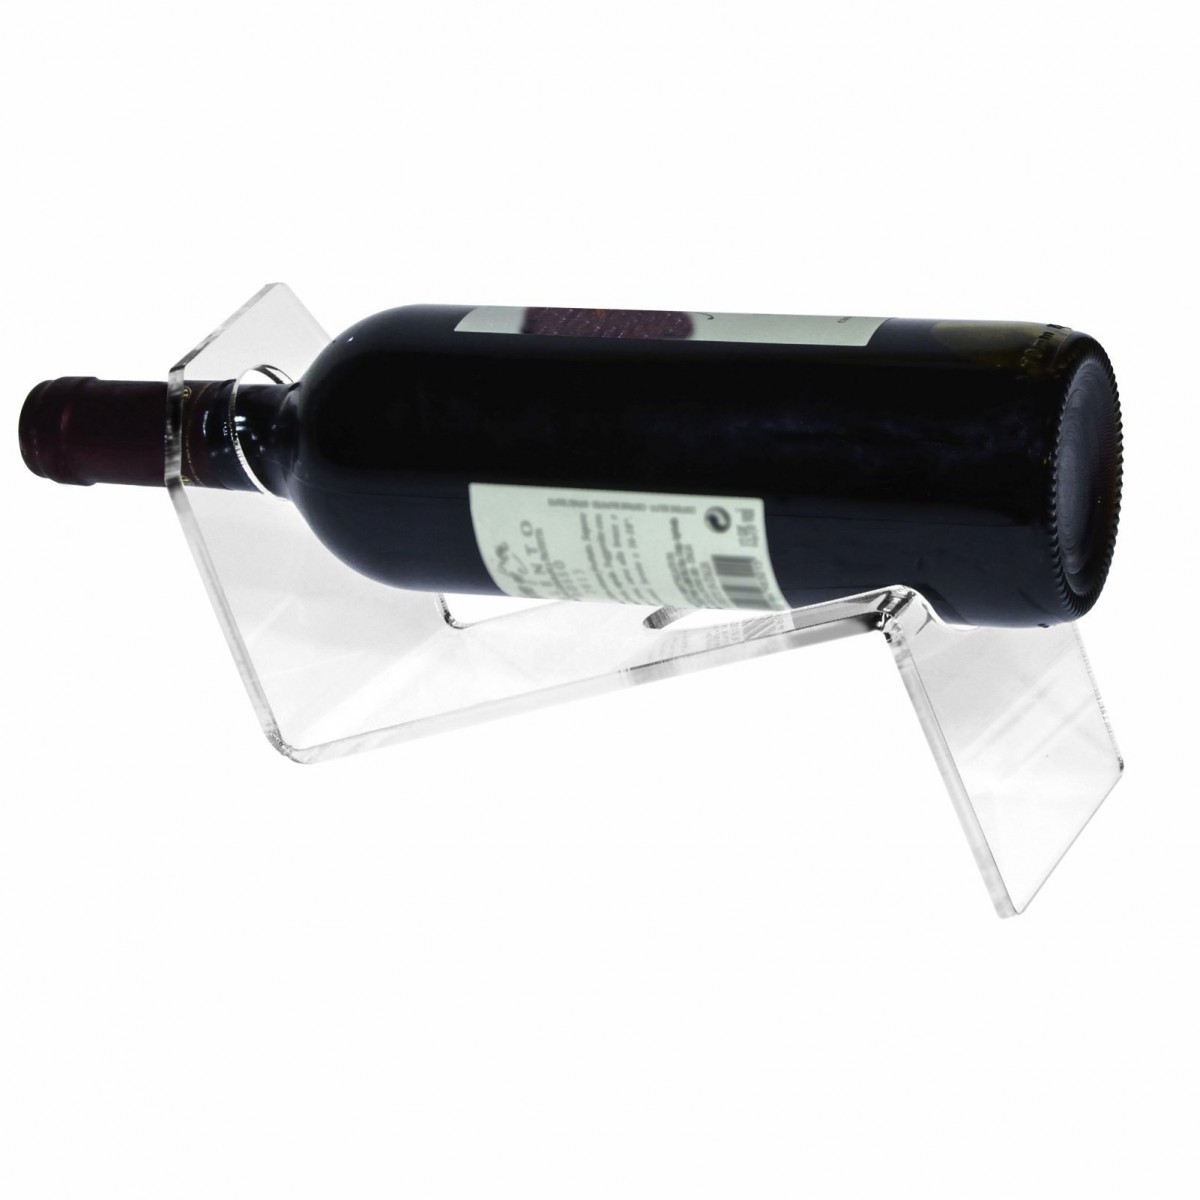 E-175 PBT-C - Portabottiglie in plexiglass trasparente da banco per 1 bottiglia - CM(LxPxH): 29x10x10